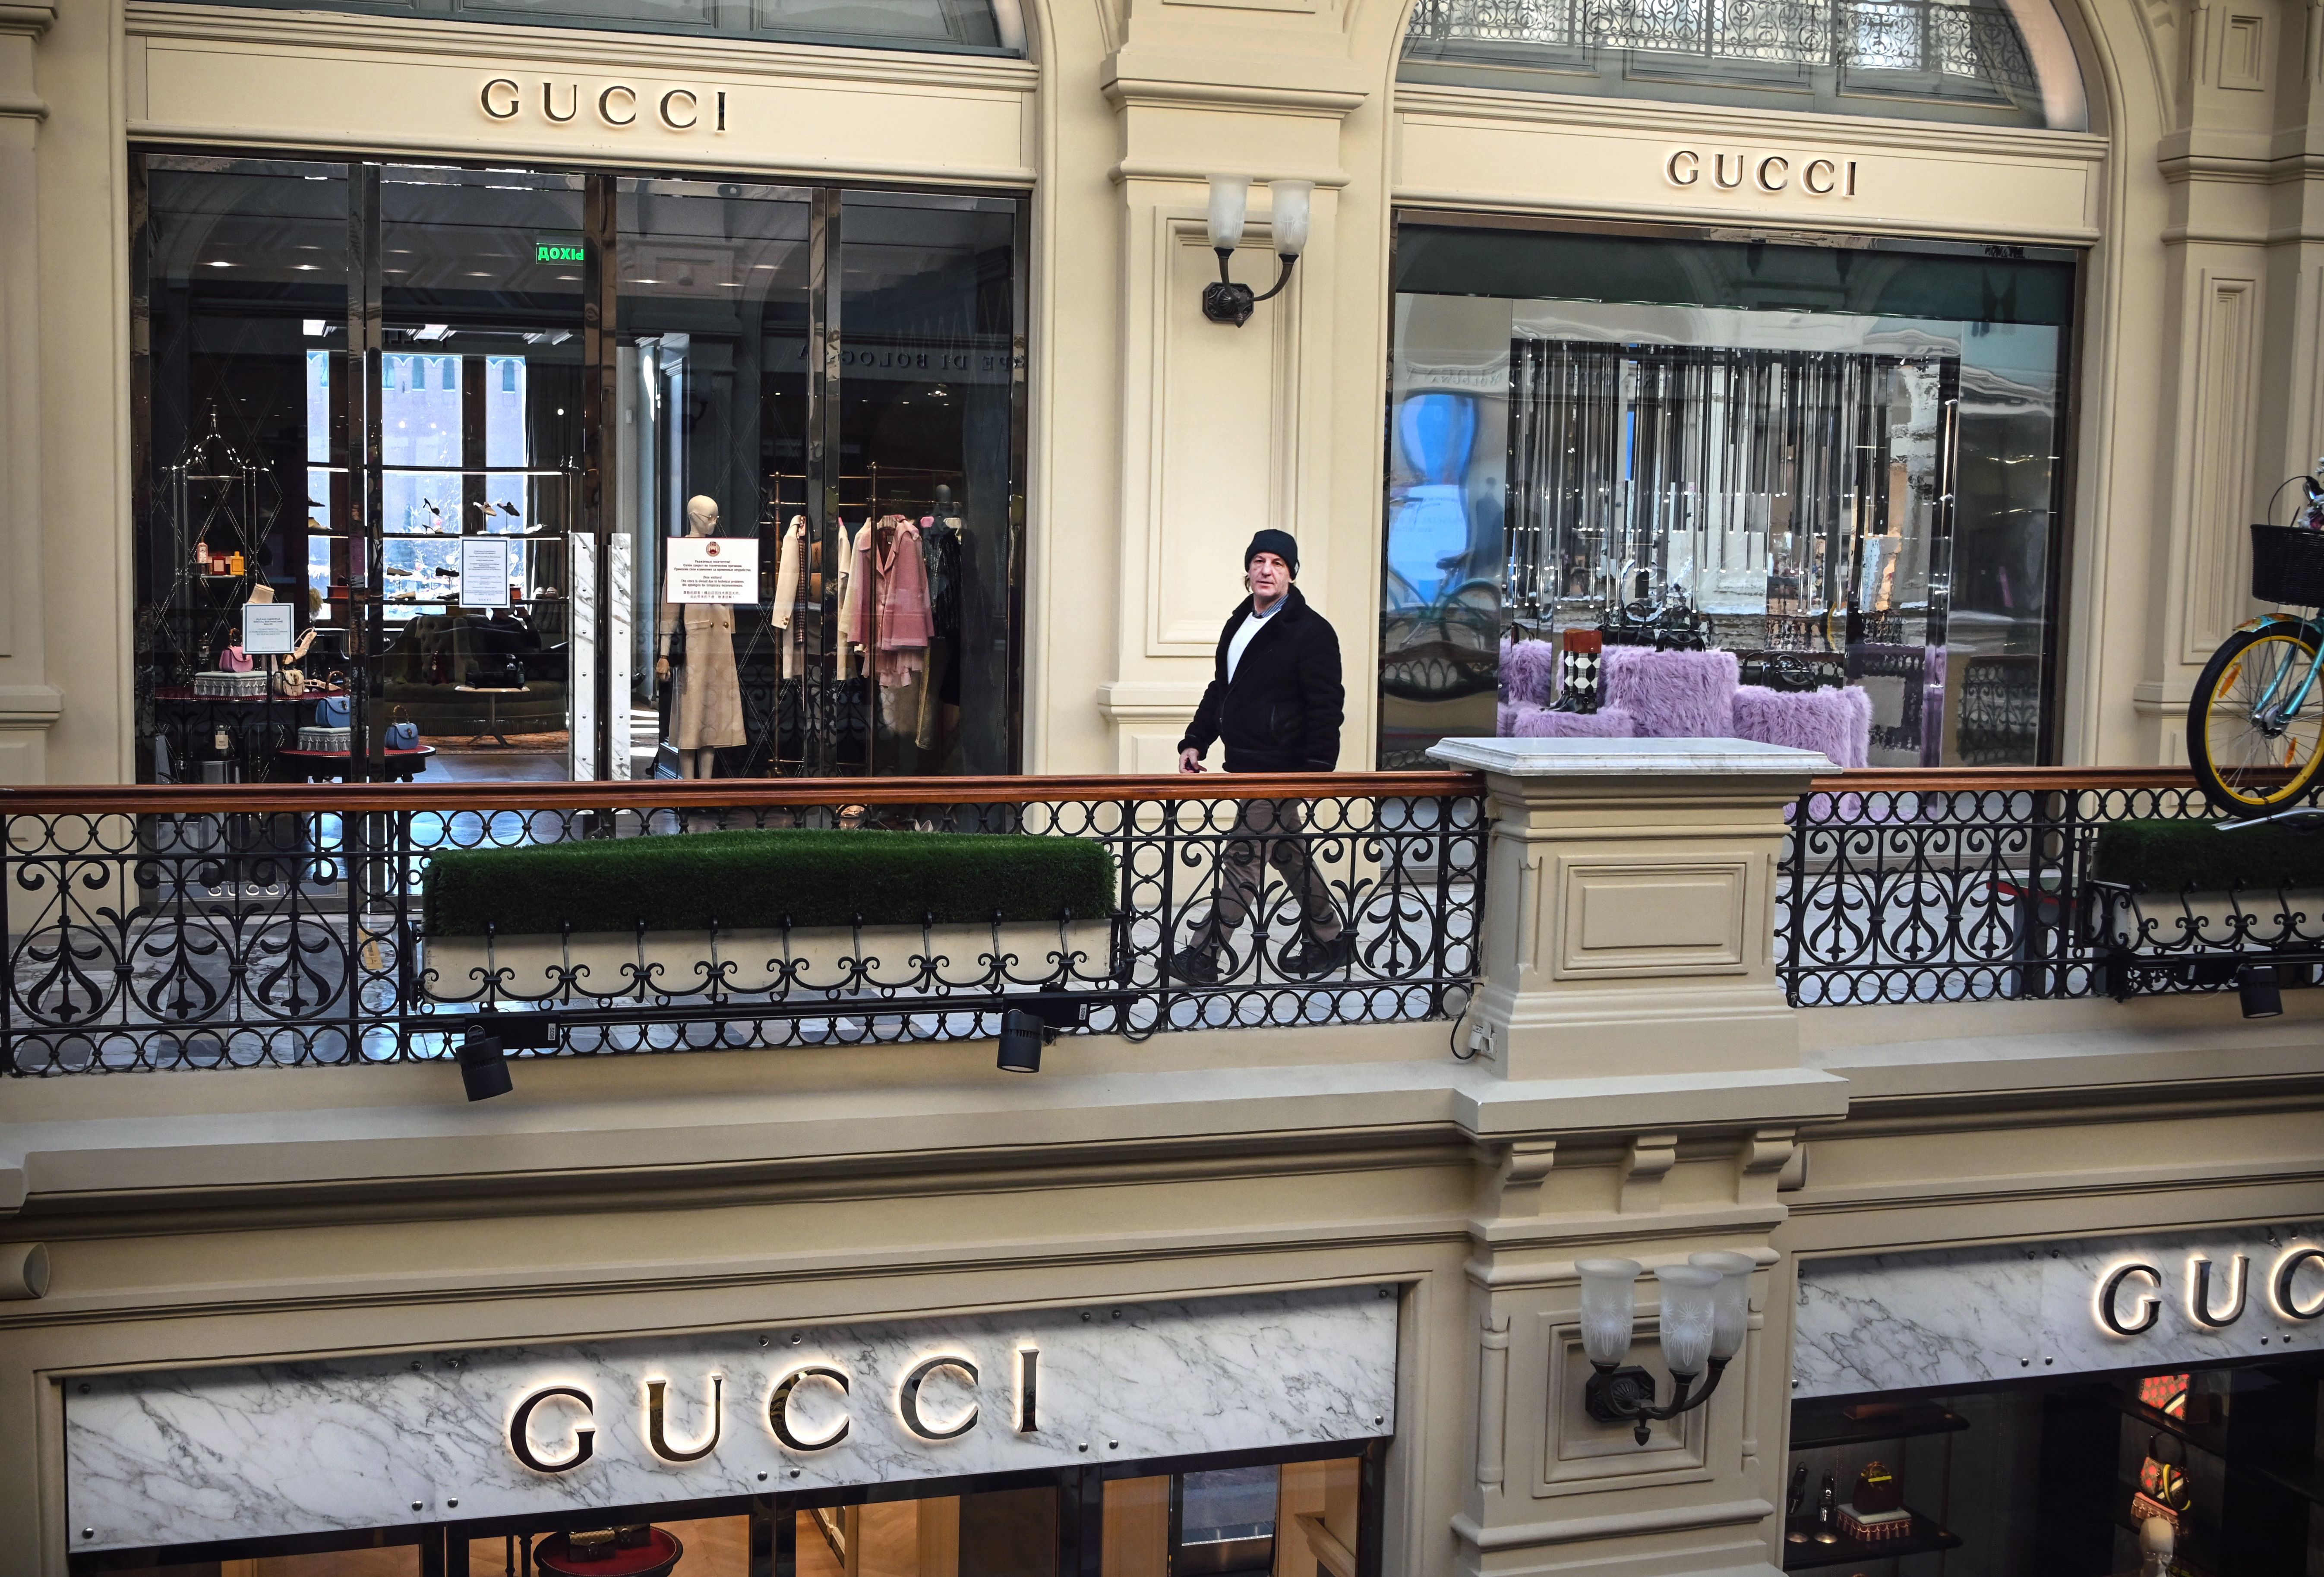 Vinnytsia, Ukraine - May 30, 2021: Popular luxury brands. Gucci